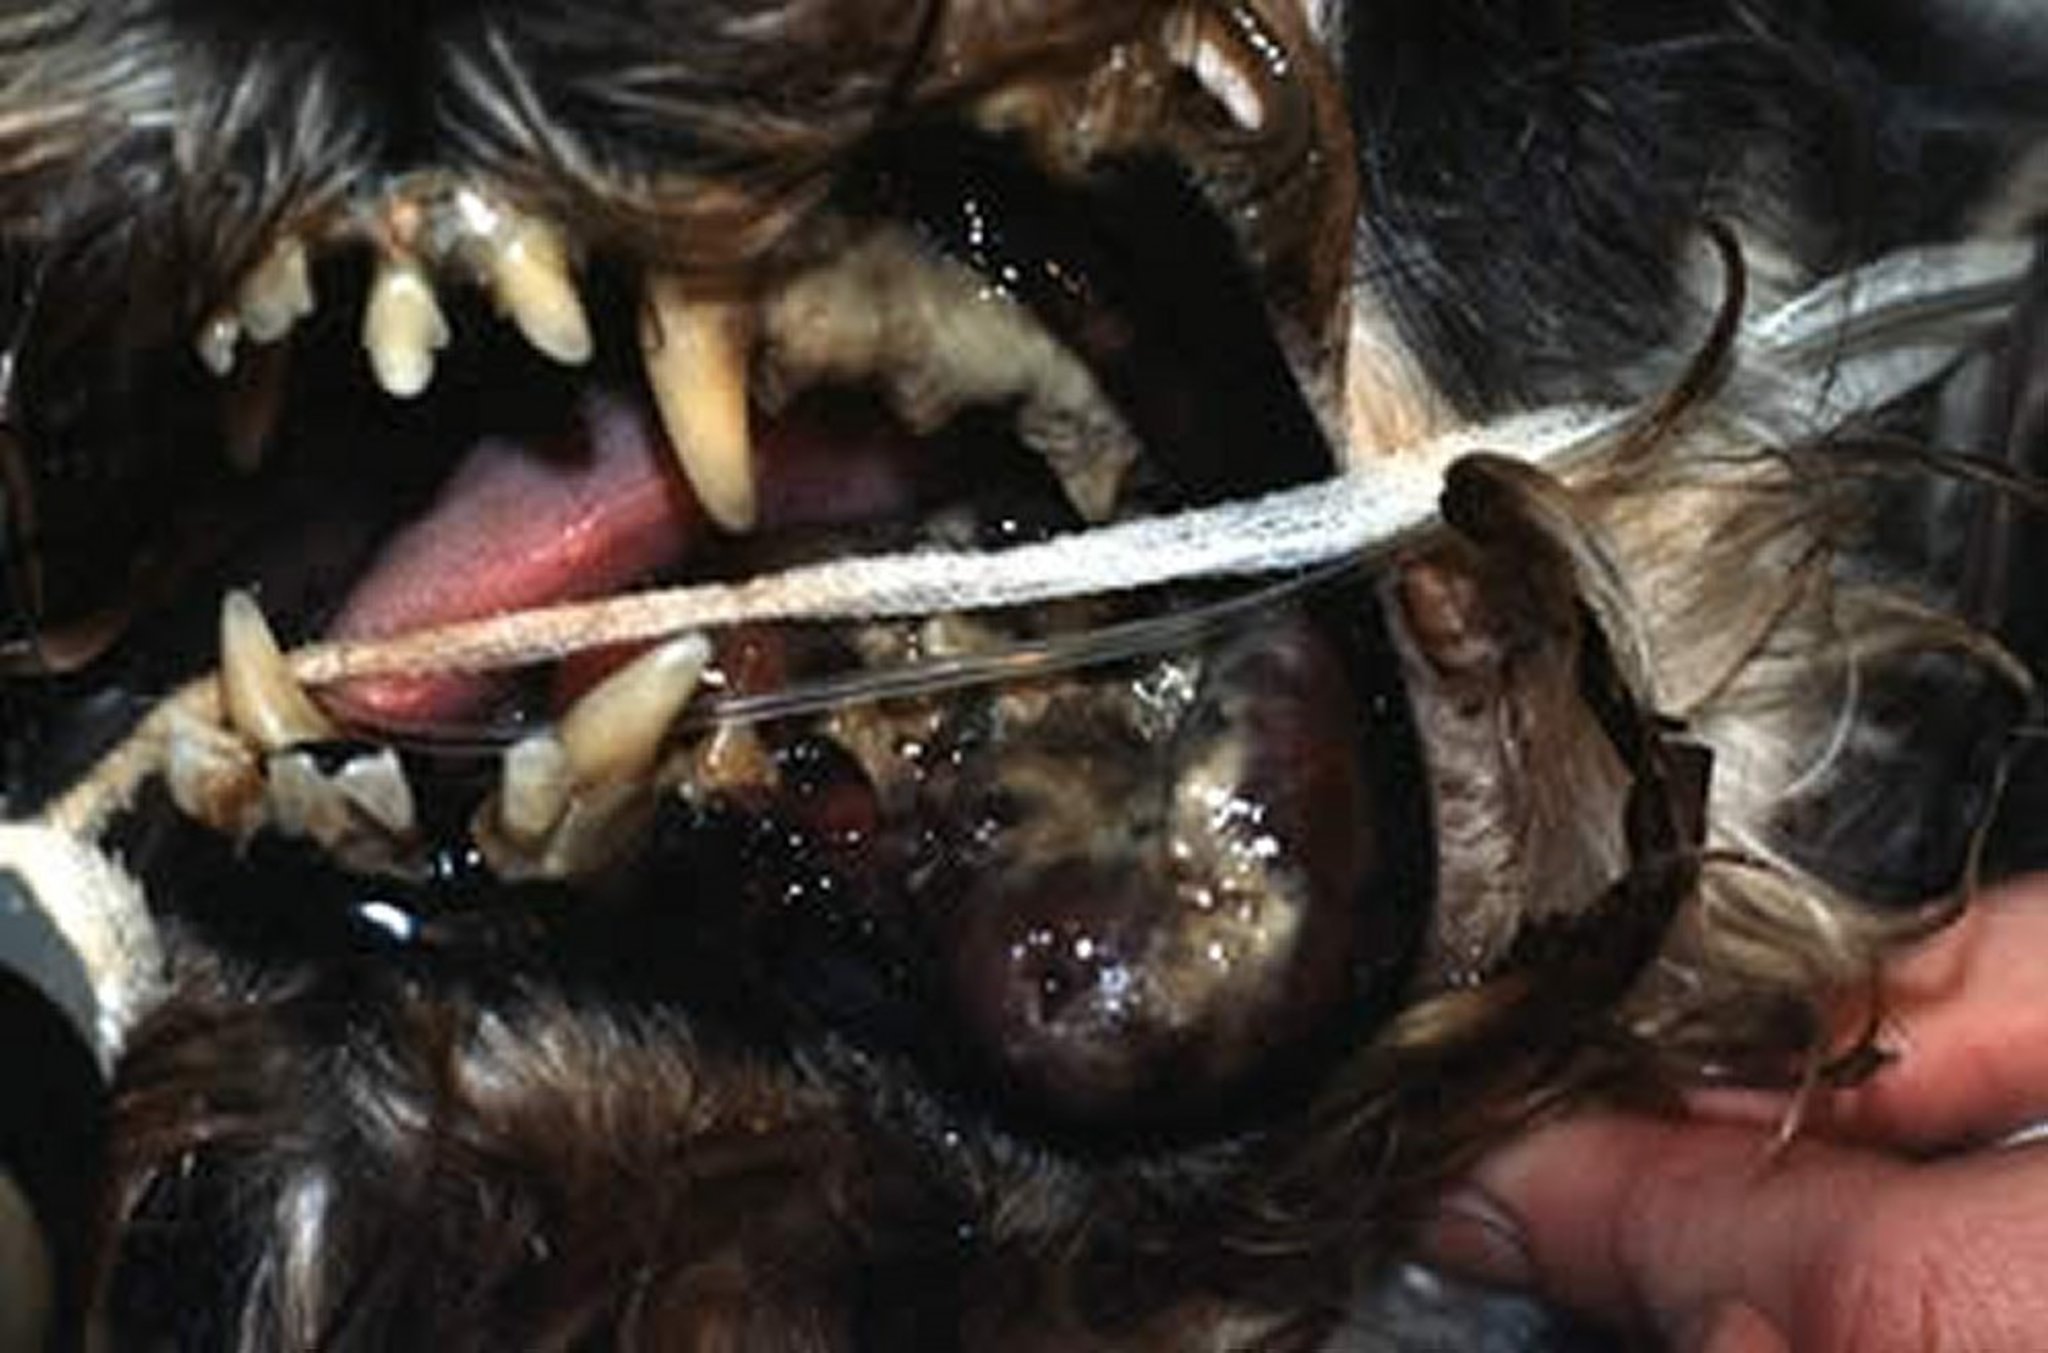 Oral malignant melanoma, dog